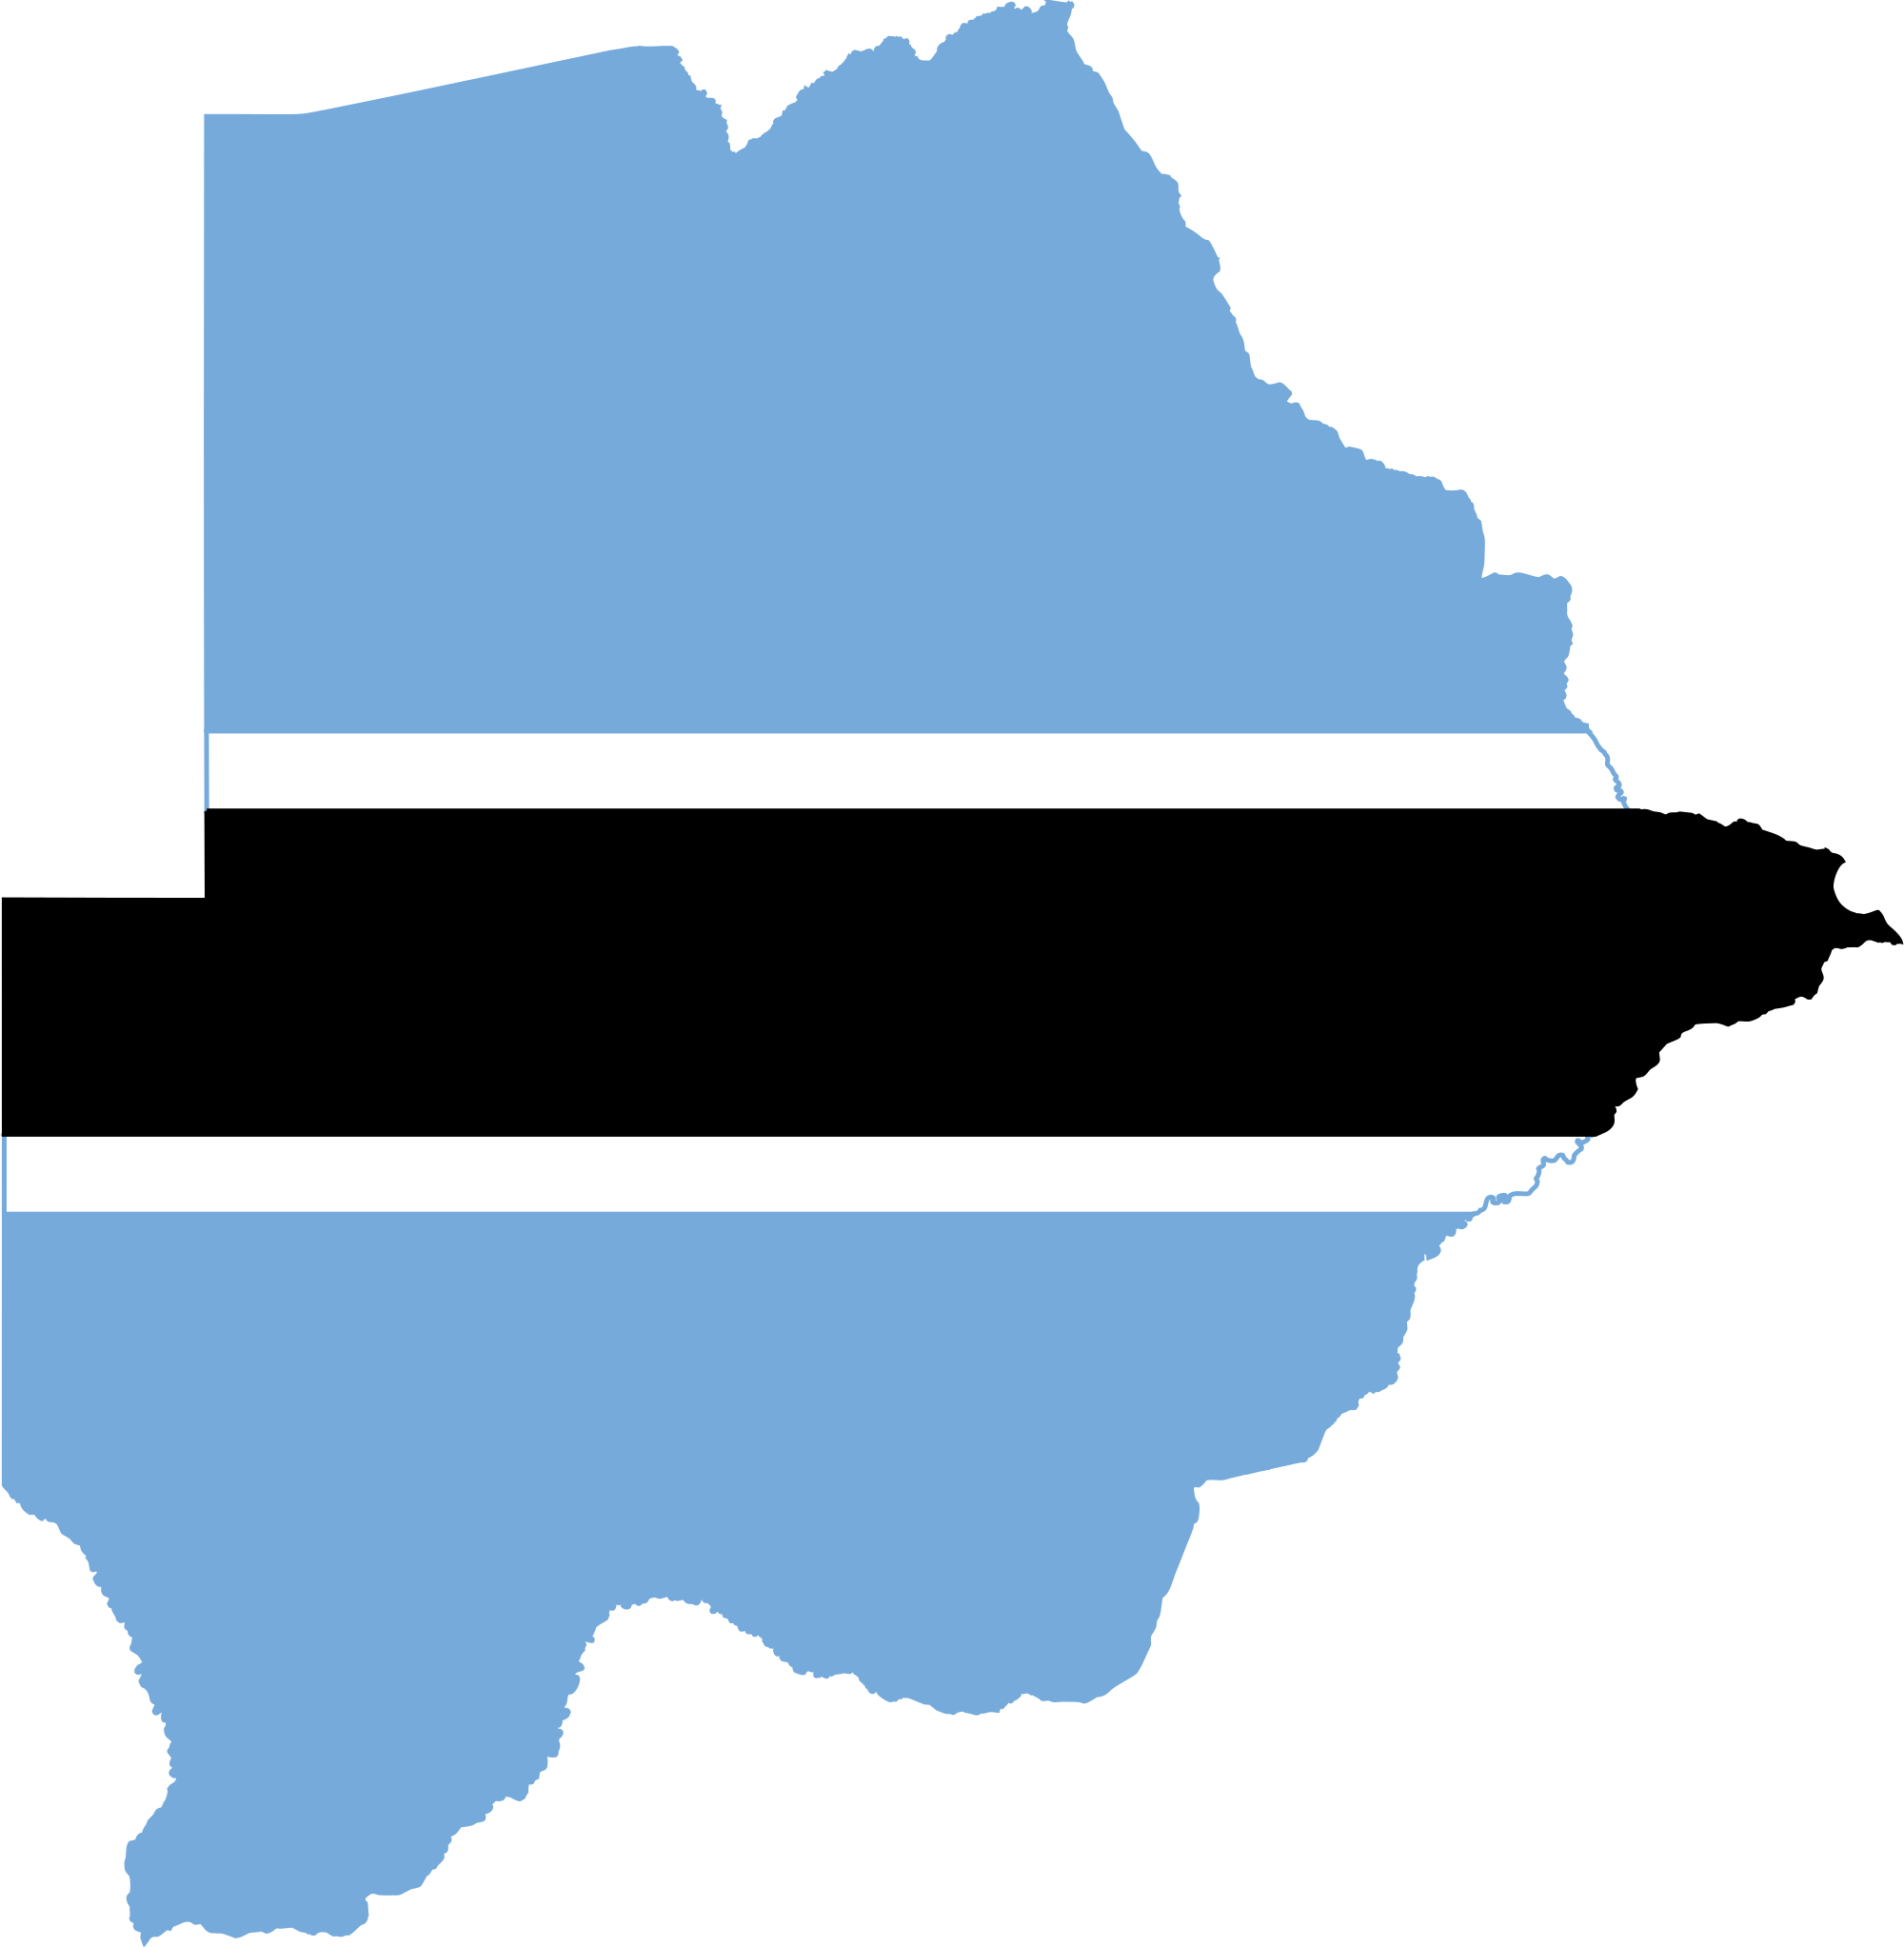 Annuaire de Commerce du Botswana